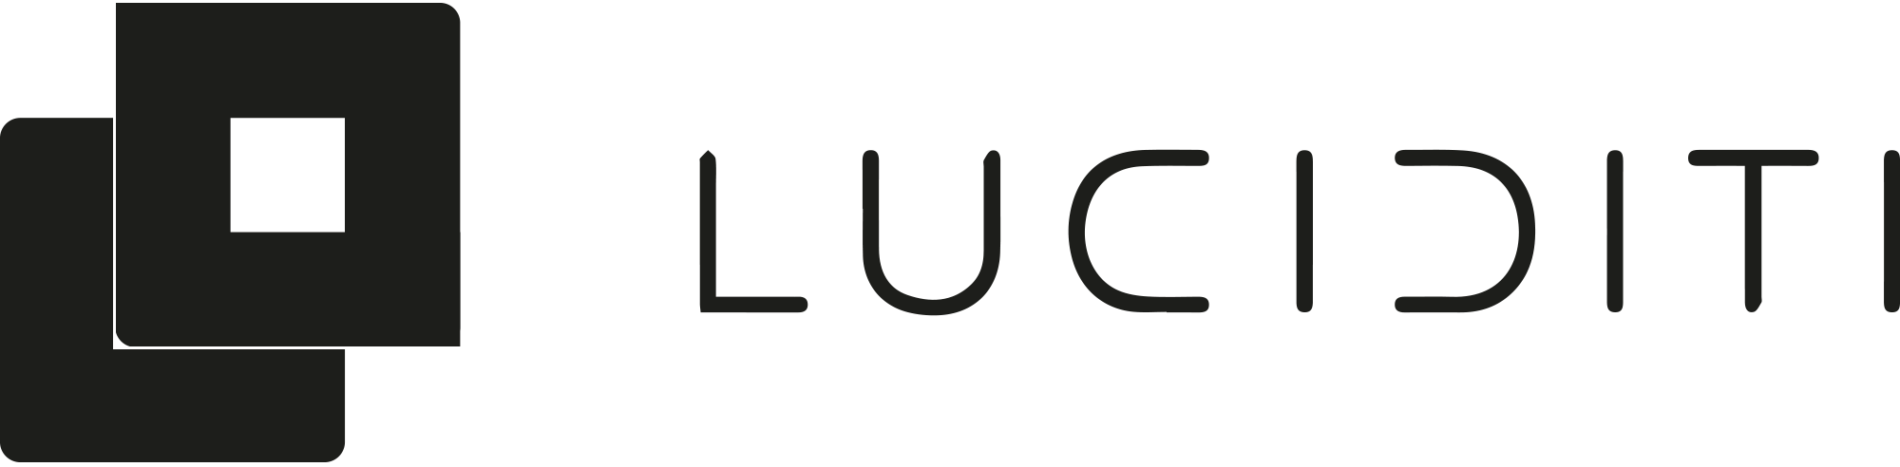 Luciditi logo2x image